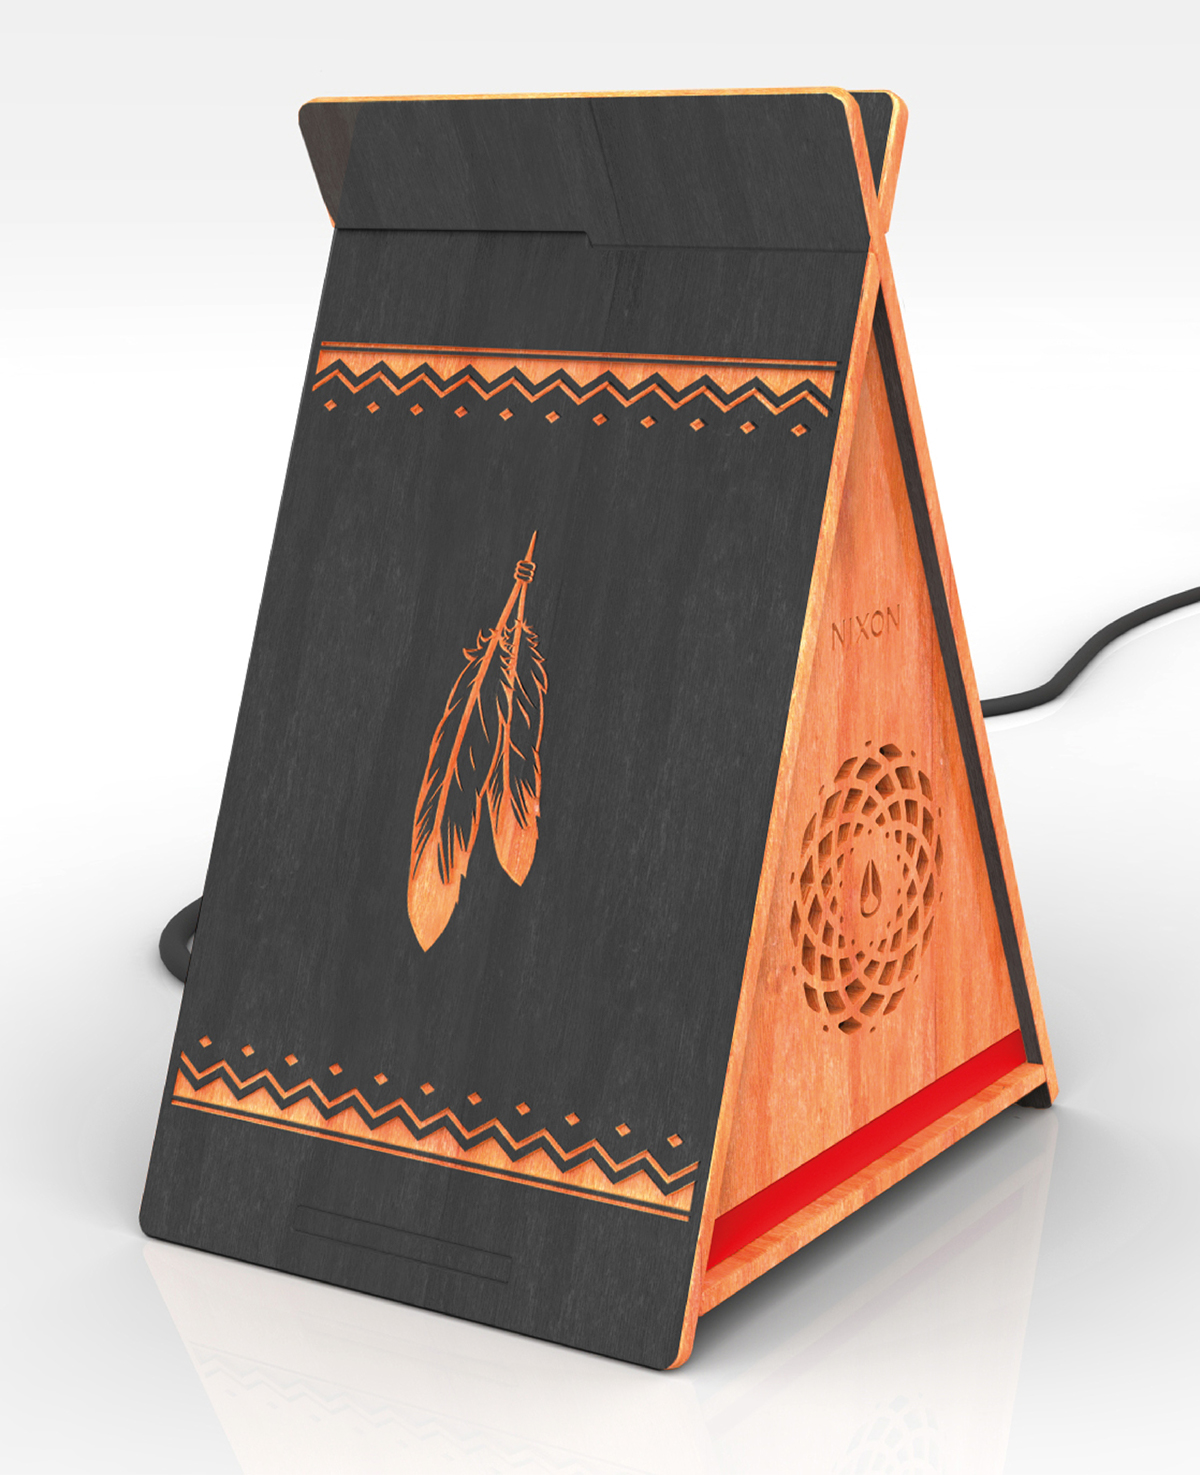 Nixon speakers wood laser lazer engraving Tipi sioux Apache Ethnic home illustrations sound Sound Box ecologic